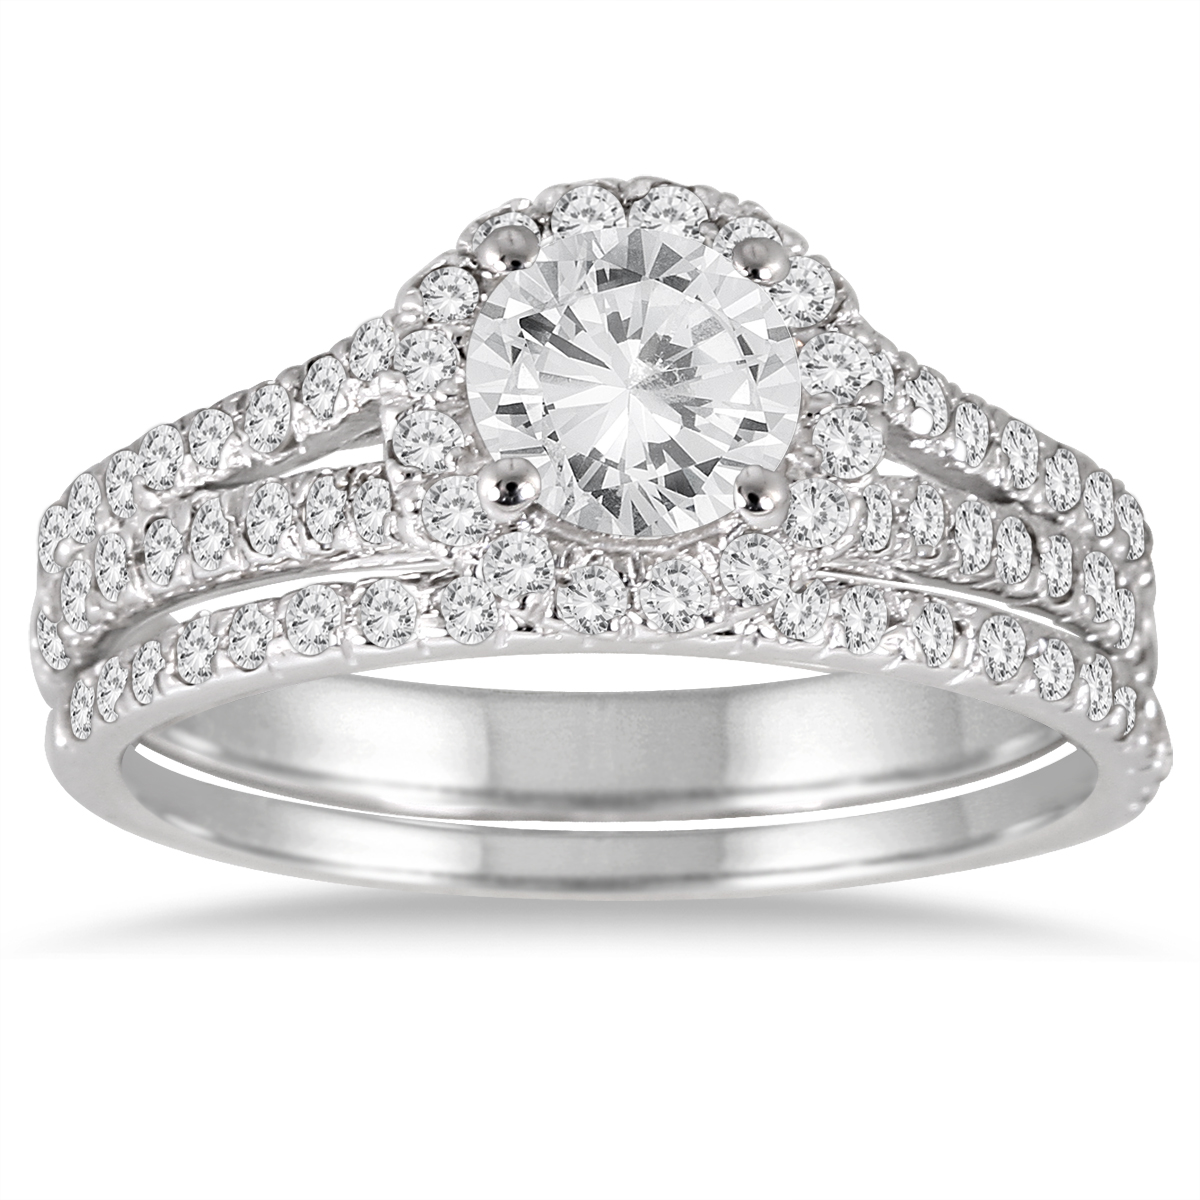 1 1/2 Carat TW Diamond Bridal Set in 14K White Gold